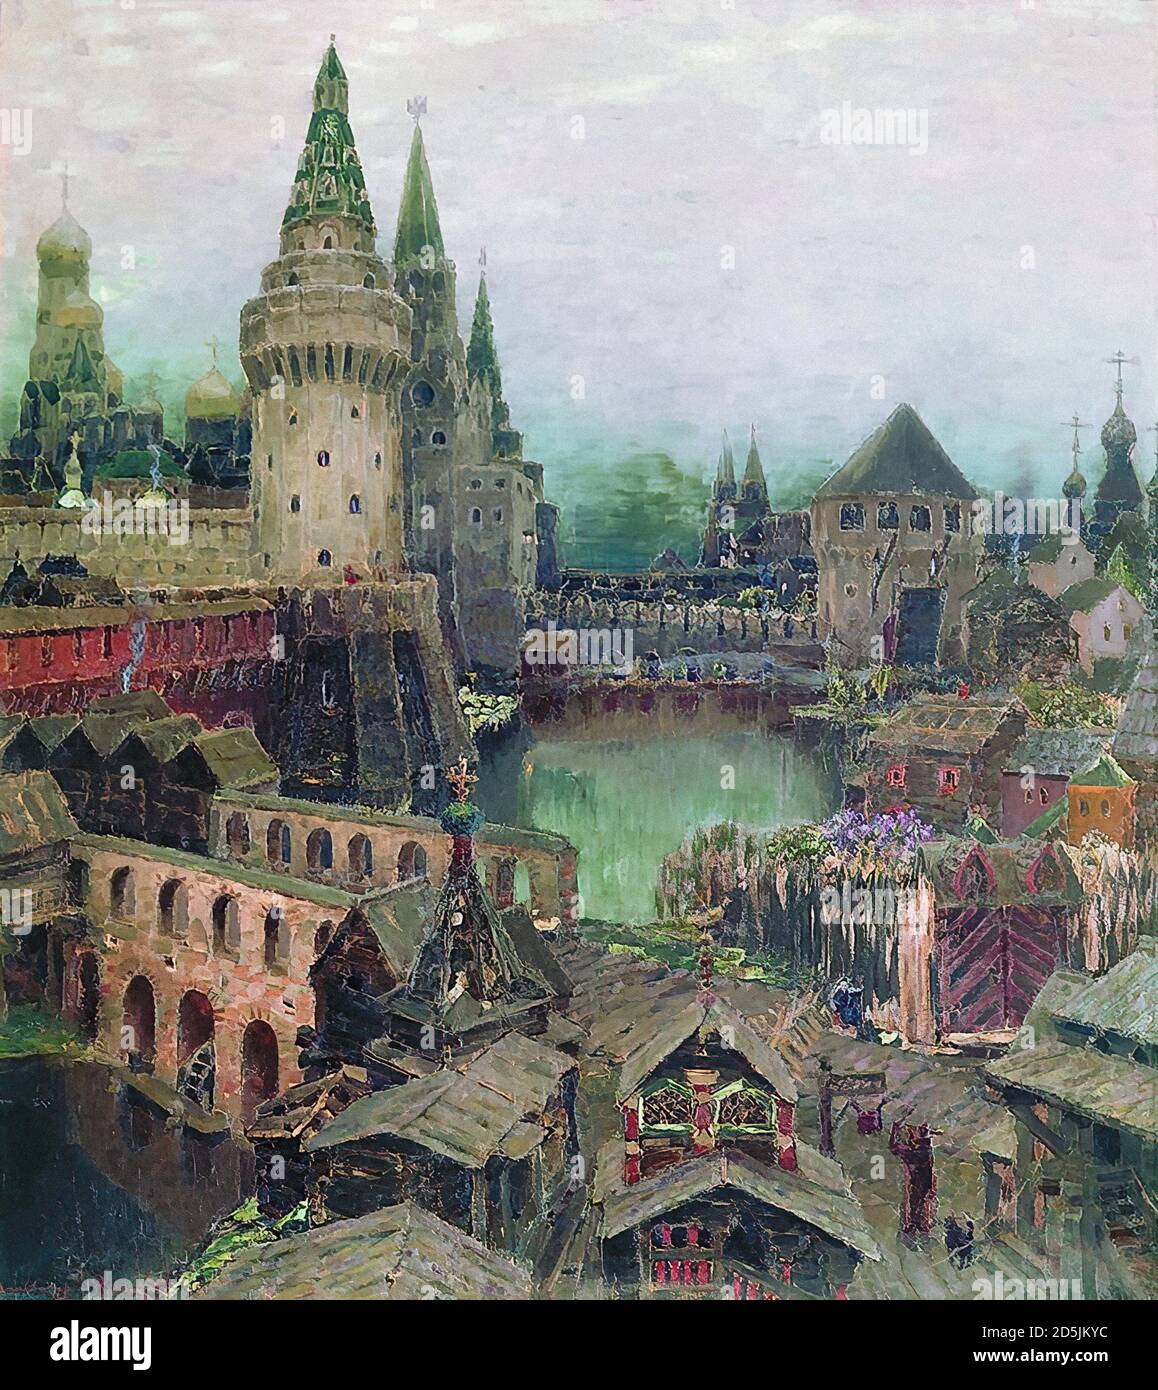 Картины 15 века россия